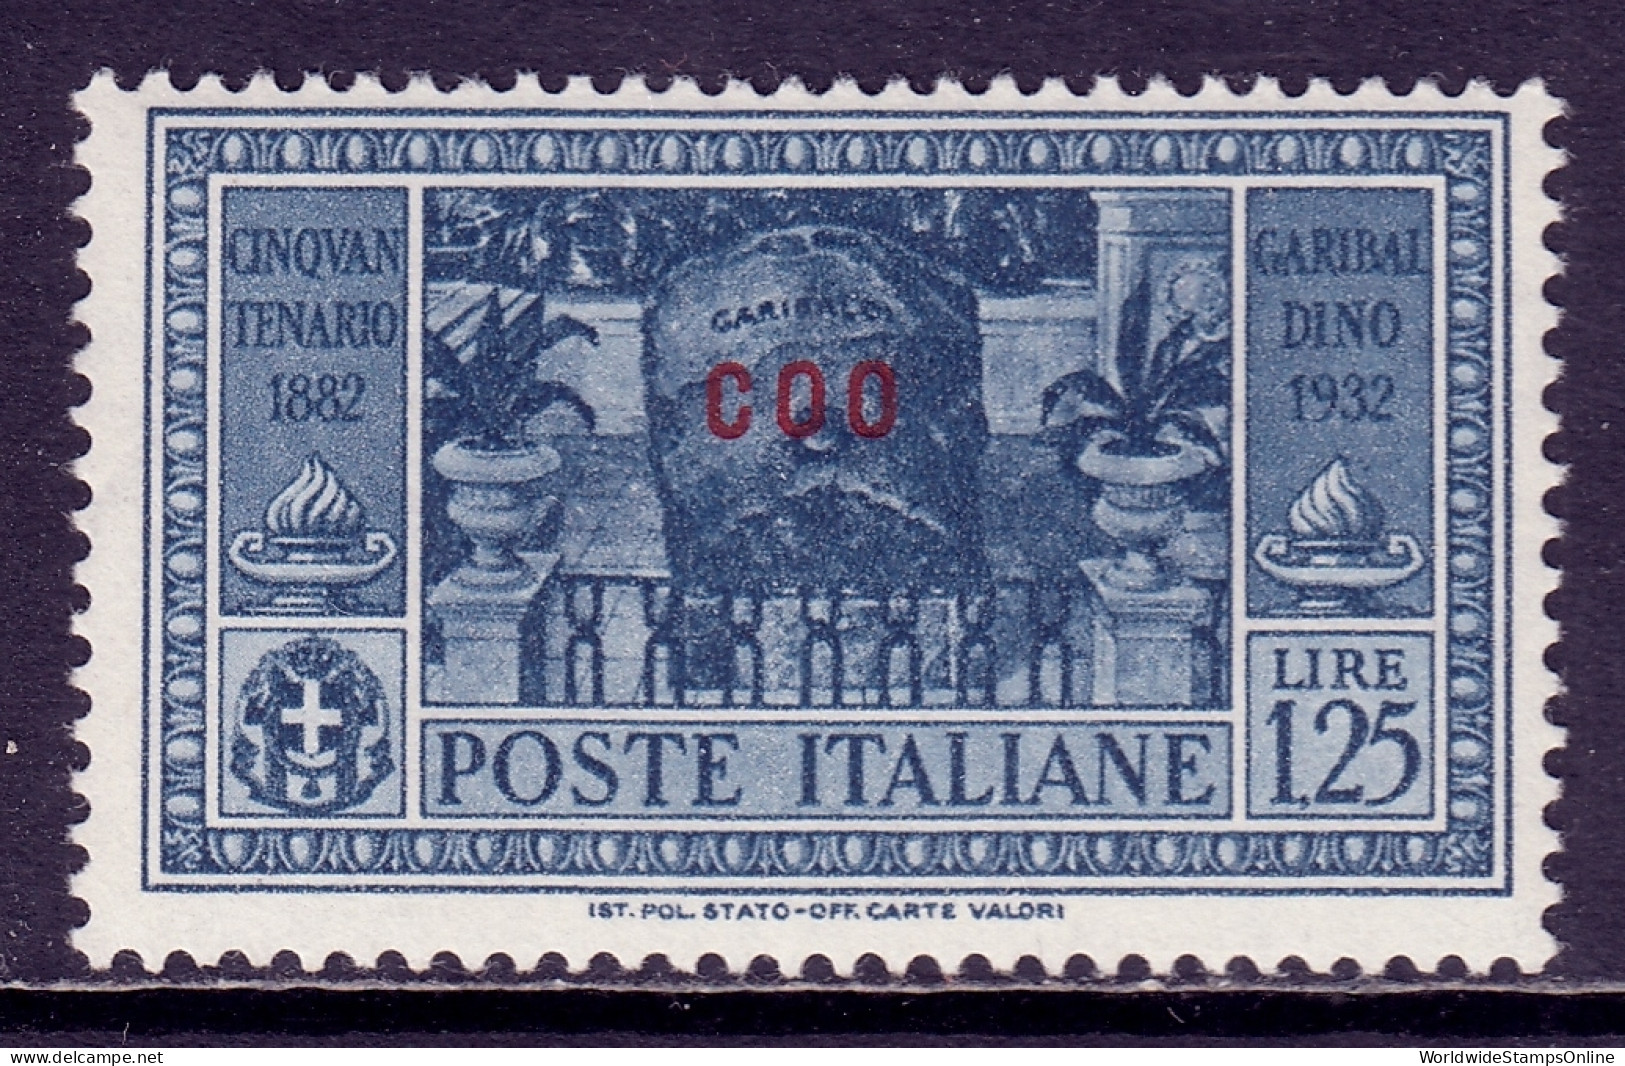 Italy (Coo) - Scott #23 - MH - SCV $18 - Egeo (Coo)